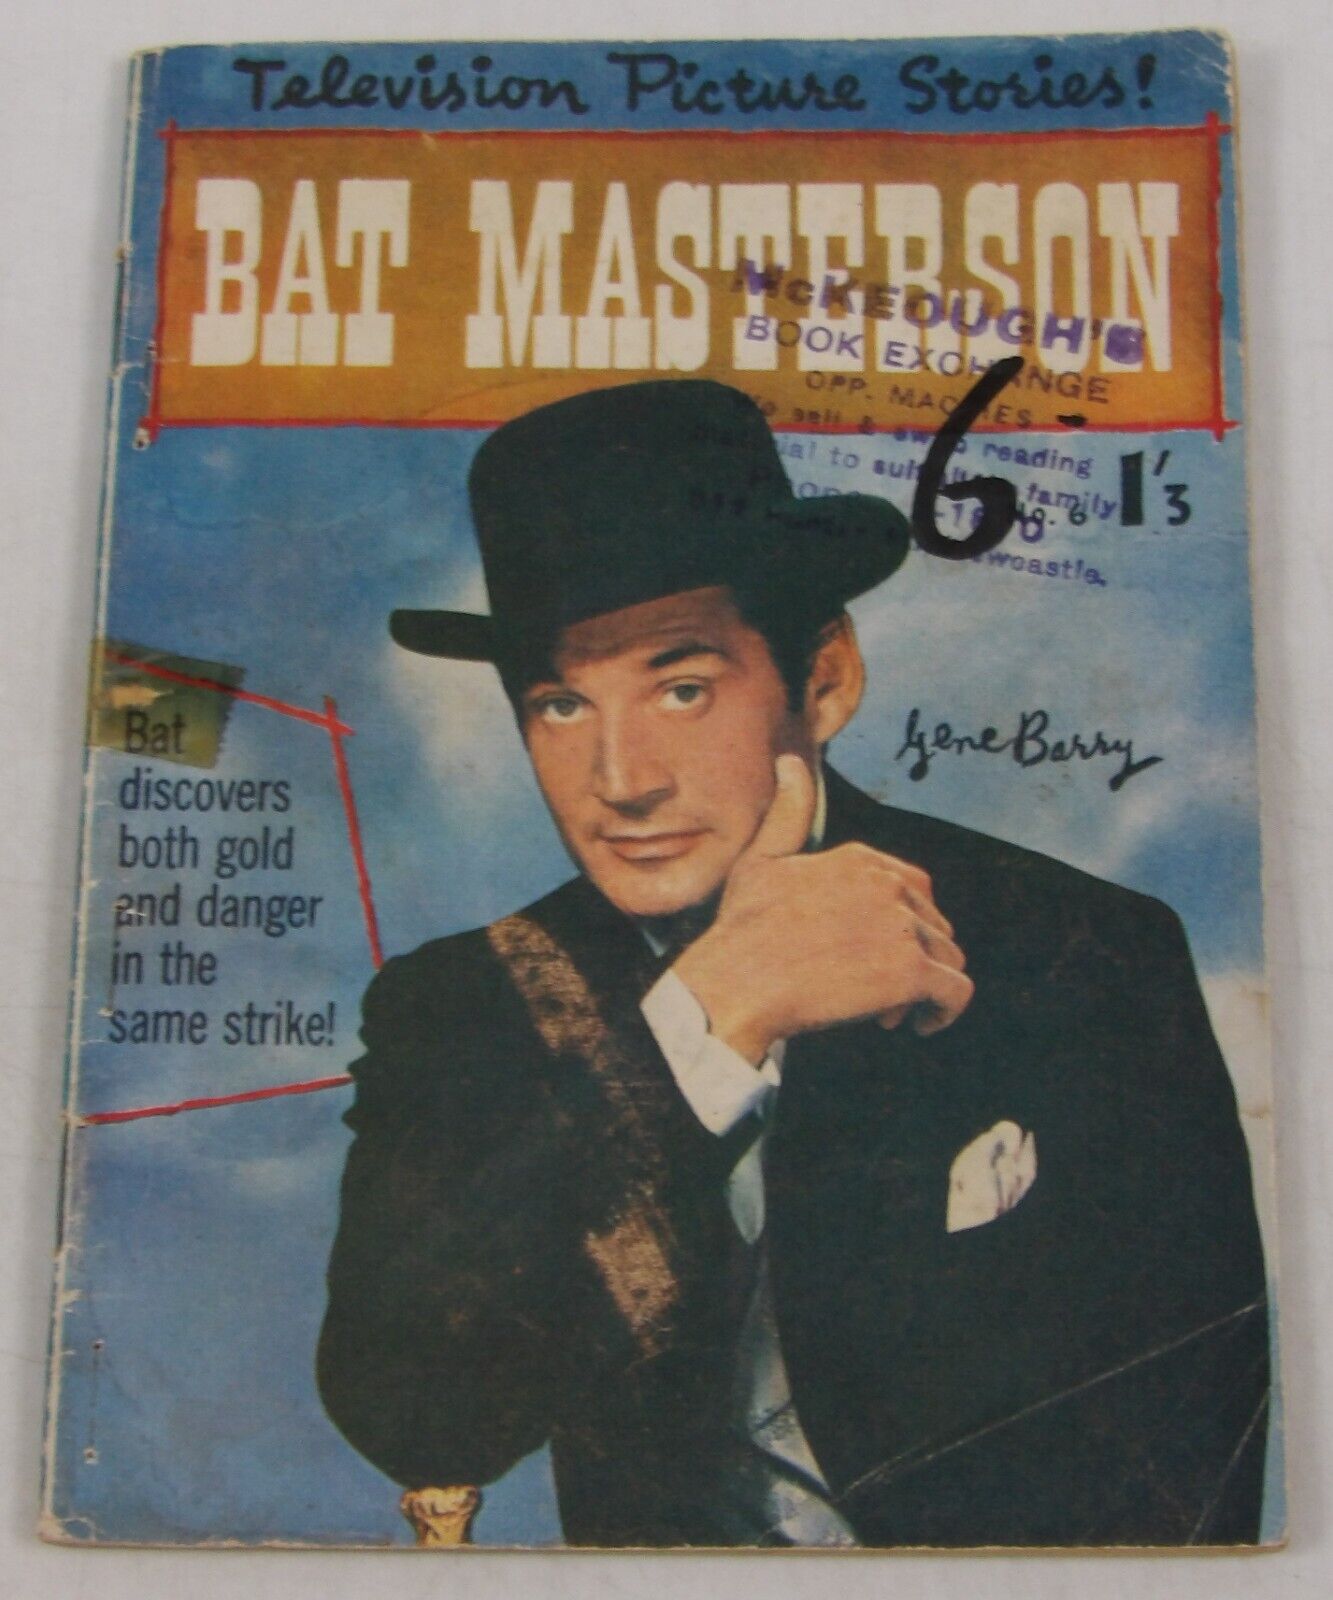 Bat Masterson #6 low grade AUSTRALIA REPRINT Television Picture Stories - DELL